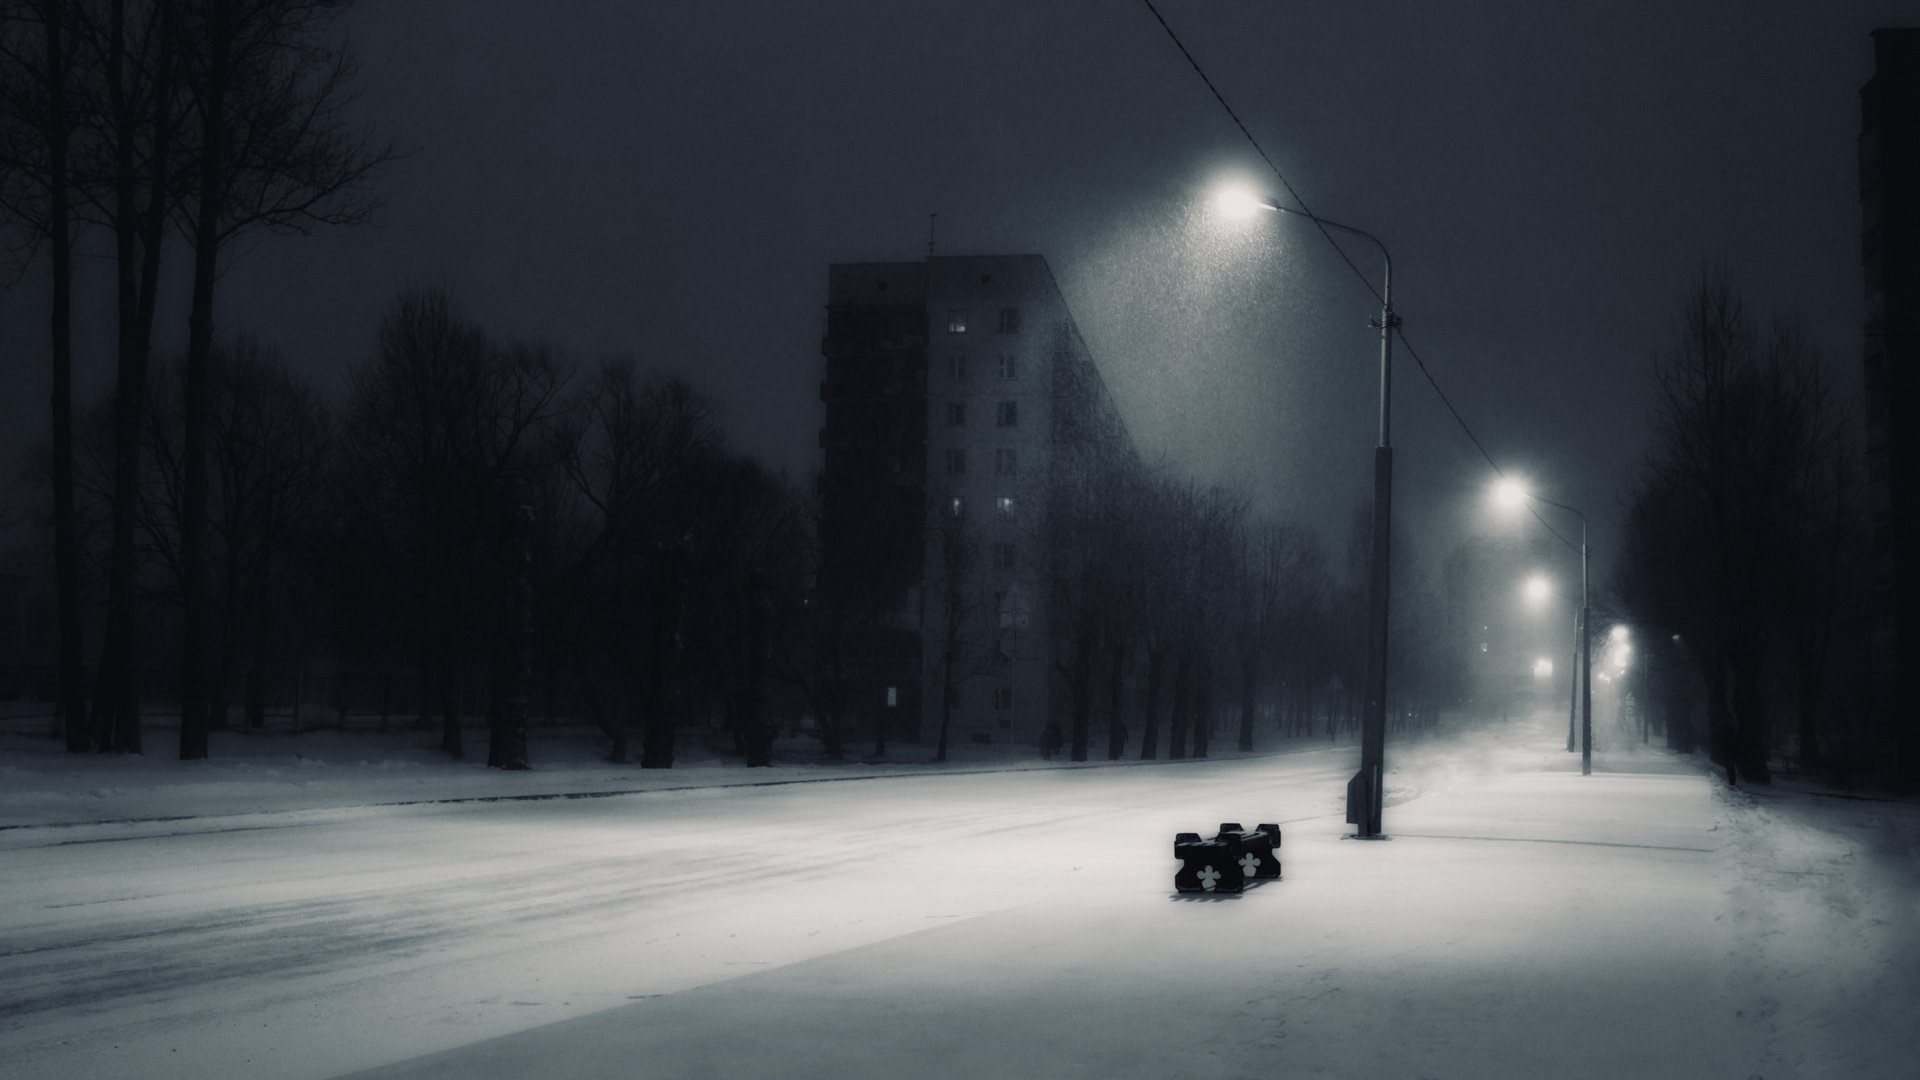 General 1920x1080 night city gray winter depressing snowing